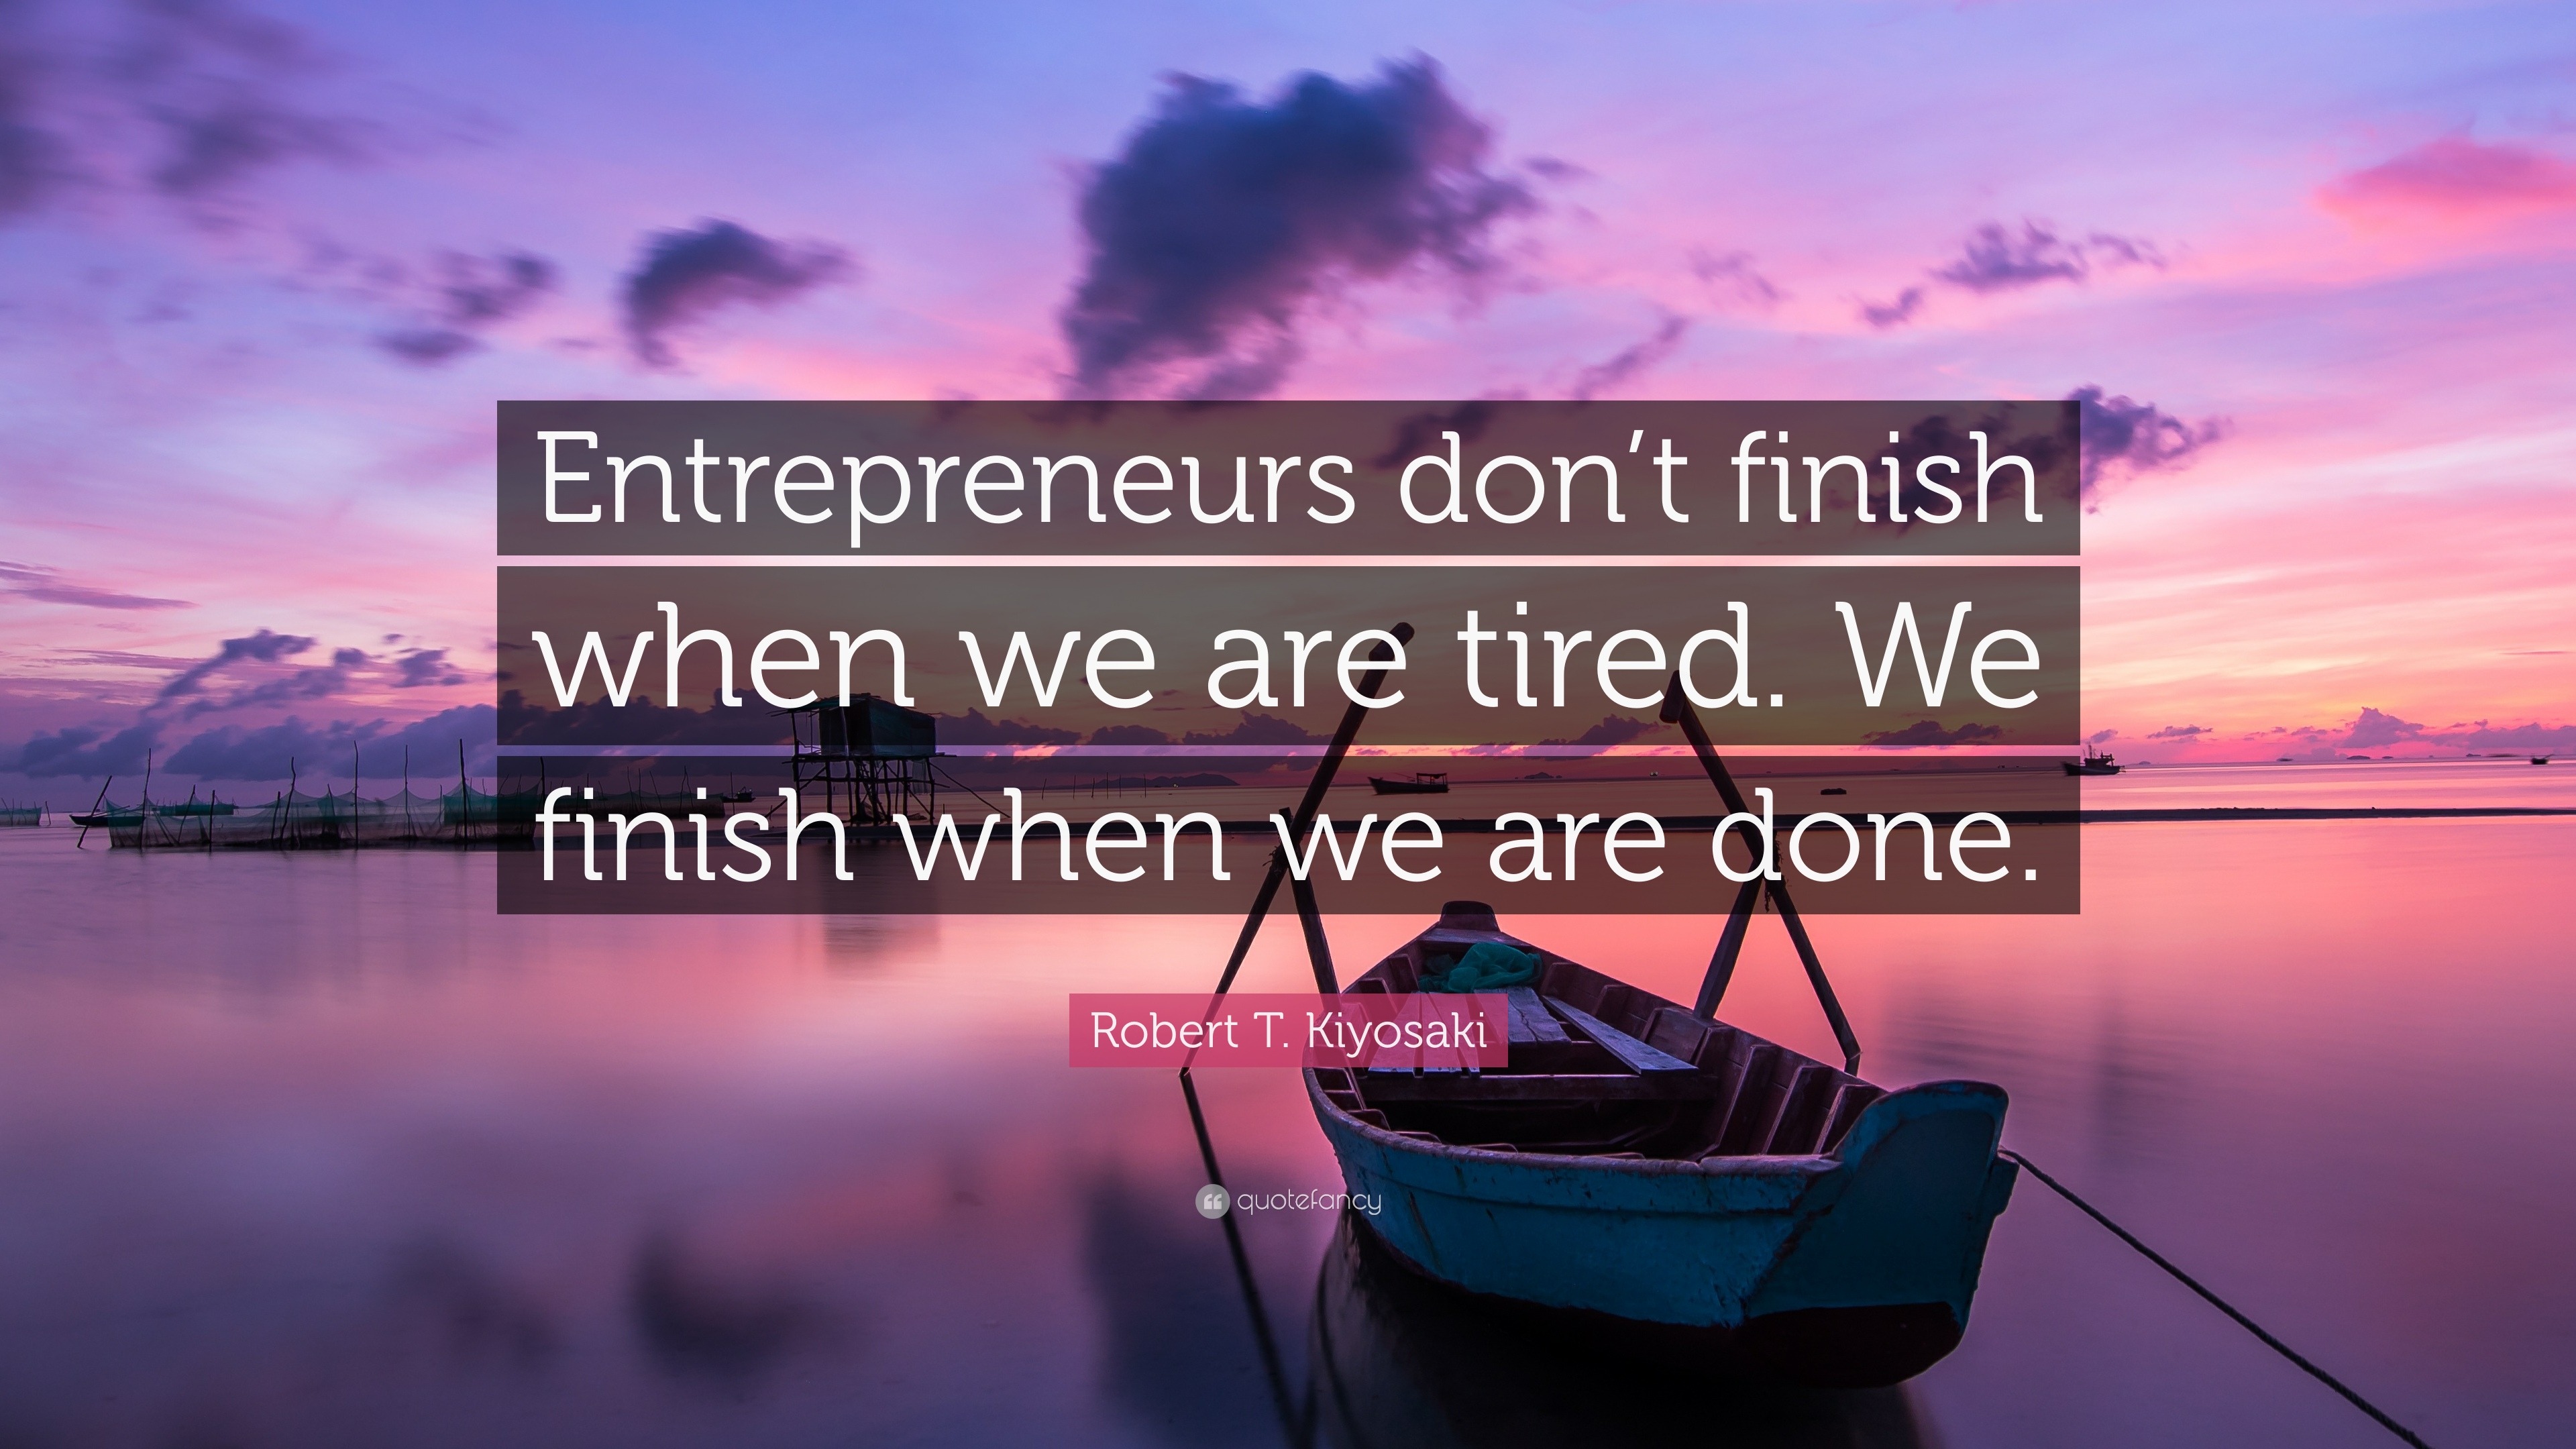 Robert T. Kiyosaki Quote: “Entrepreneurs don’t finish when we are tired